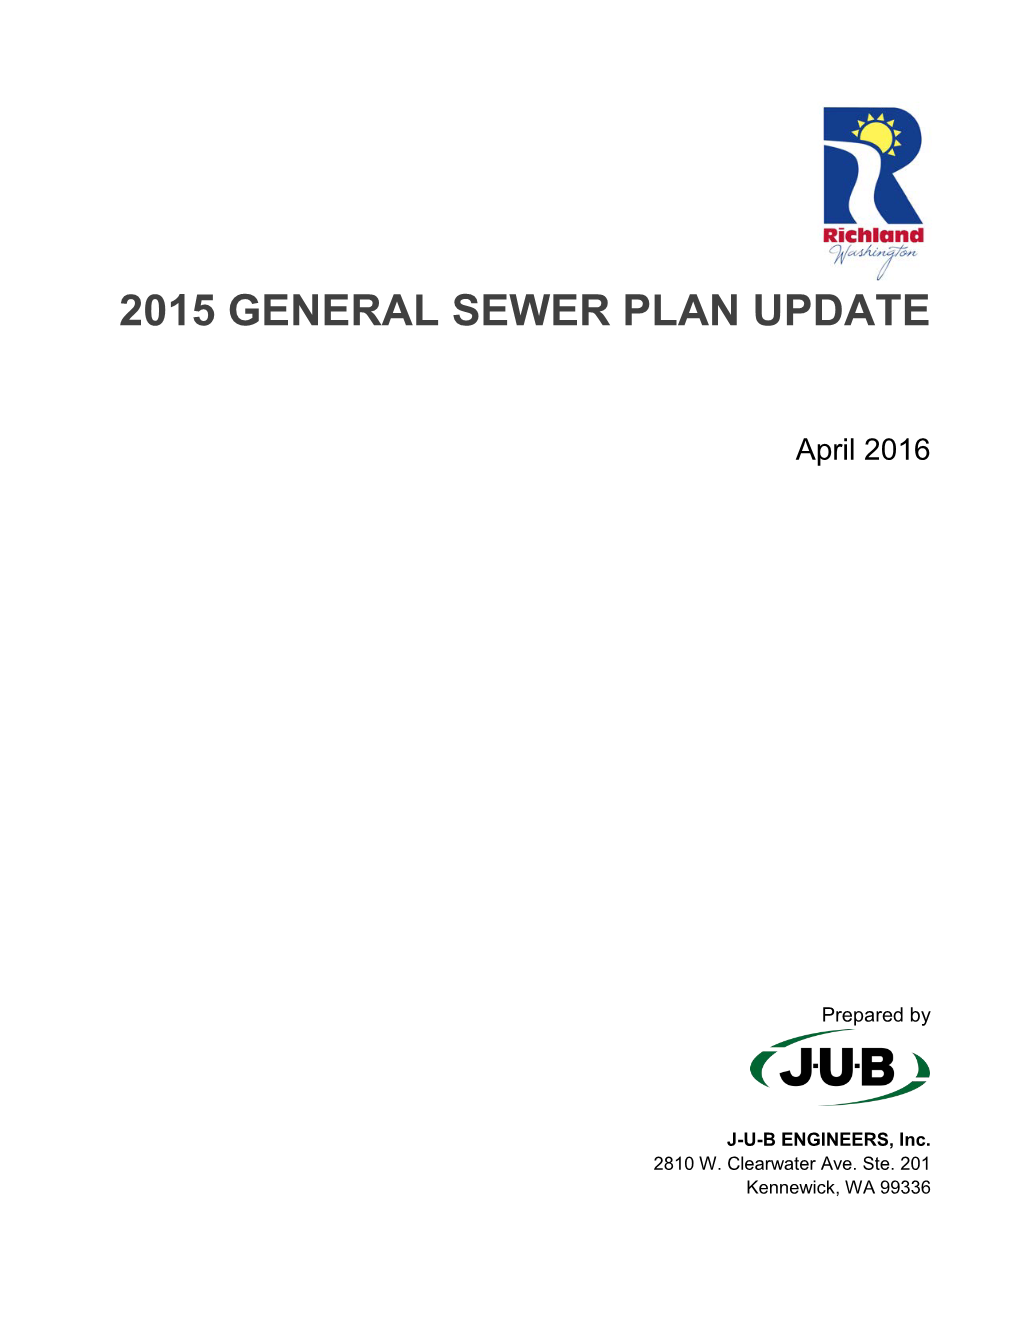 2015 General Sewer Plan Update